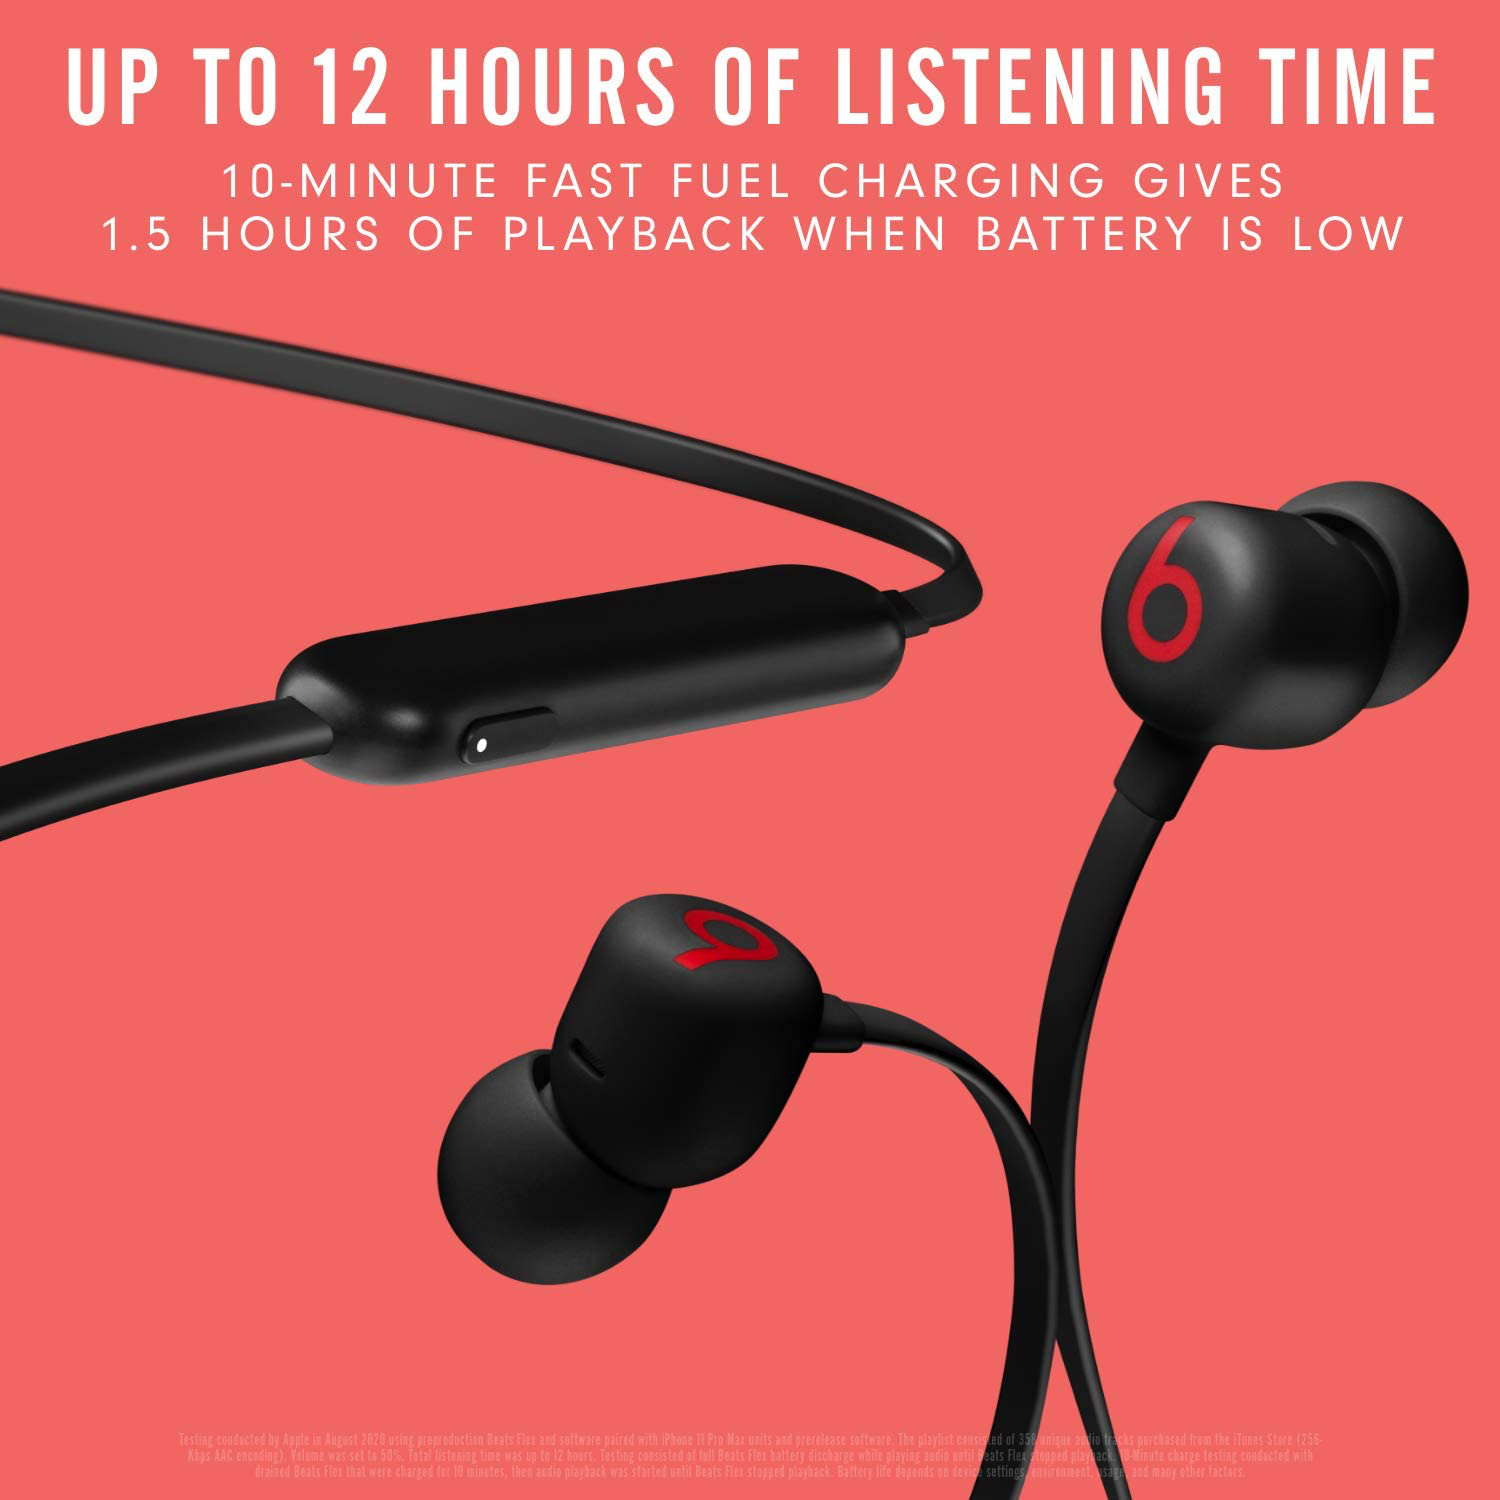 Beats Flex Wireless Earbuds – Apple W1 Headphone Chip, Magnetic Earphones, Class 1 Bluetooth, 12 Hours of Listening Time, Built-in Microphone